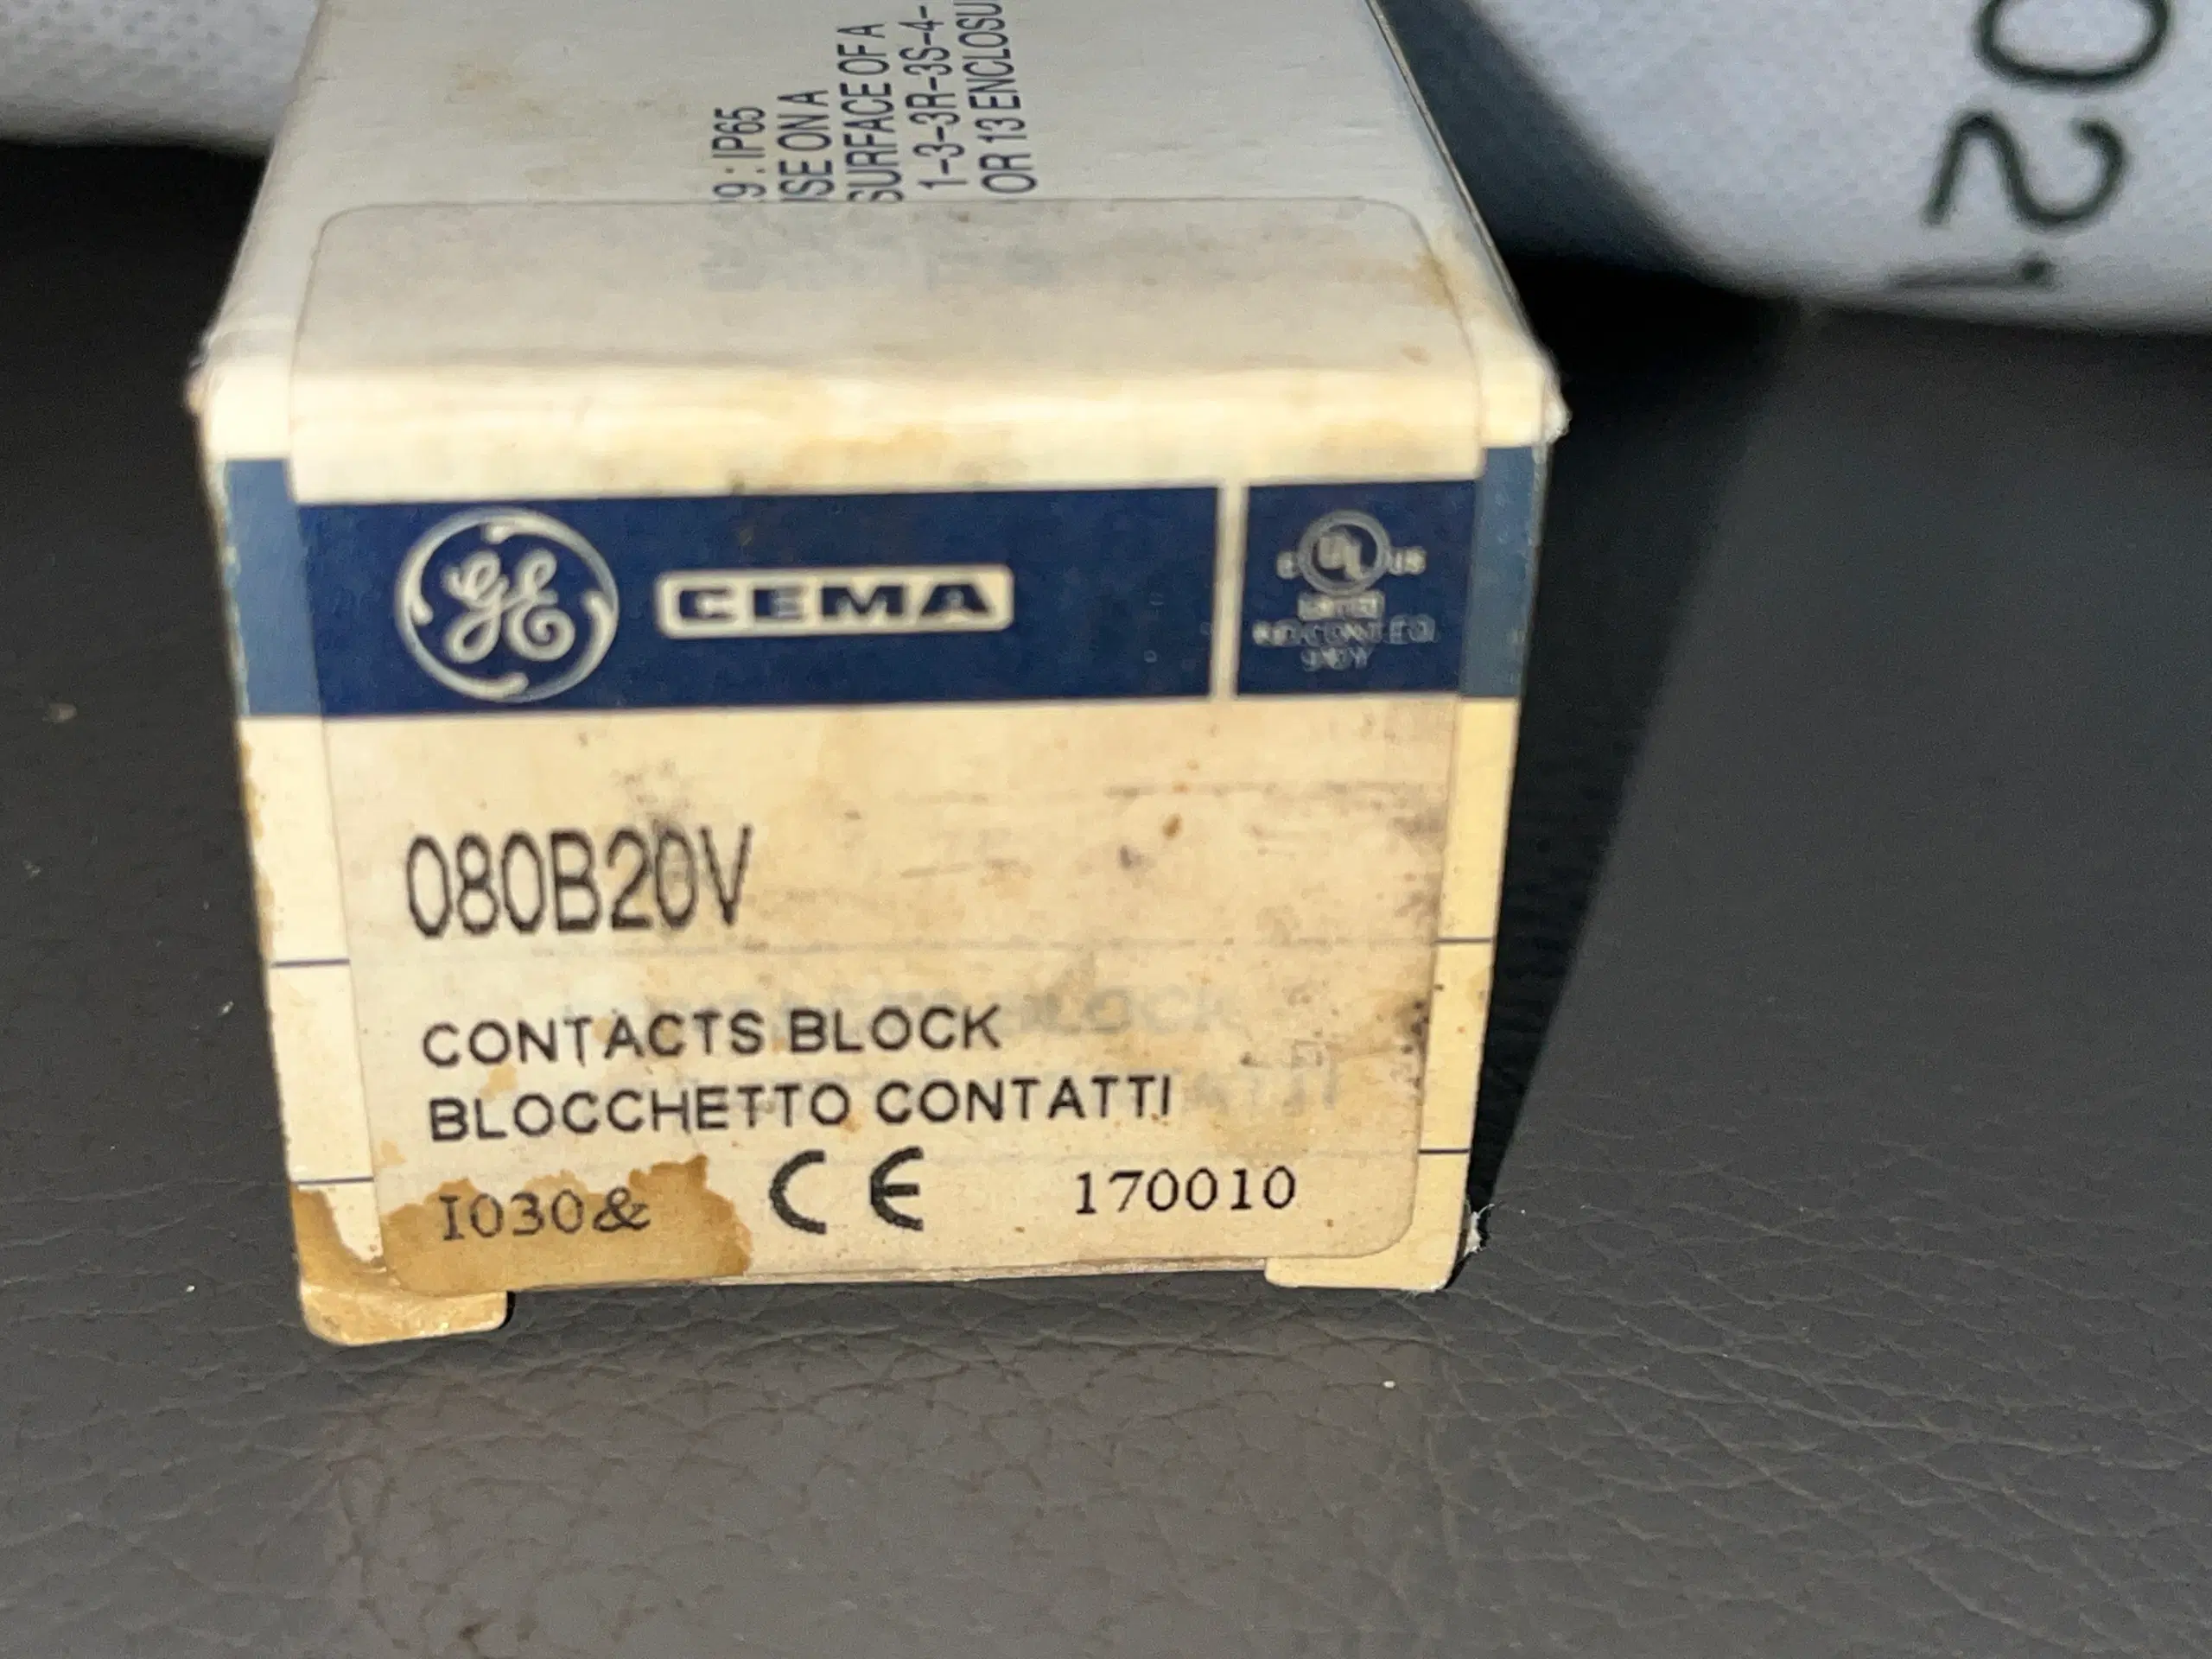 CEMA 080B20V relæ kontakt blok